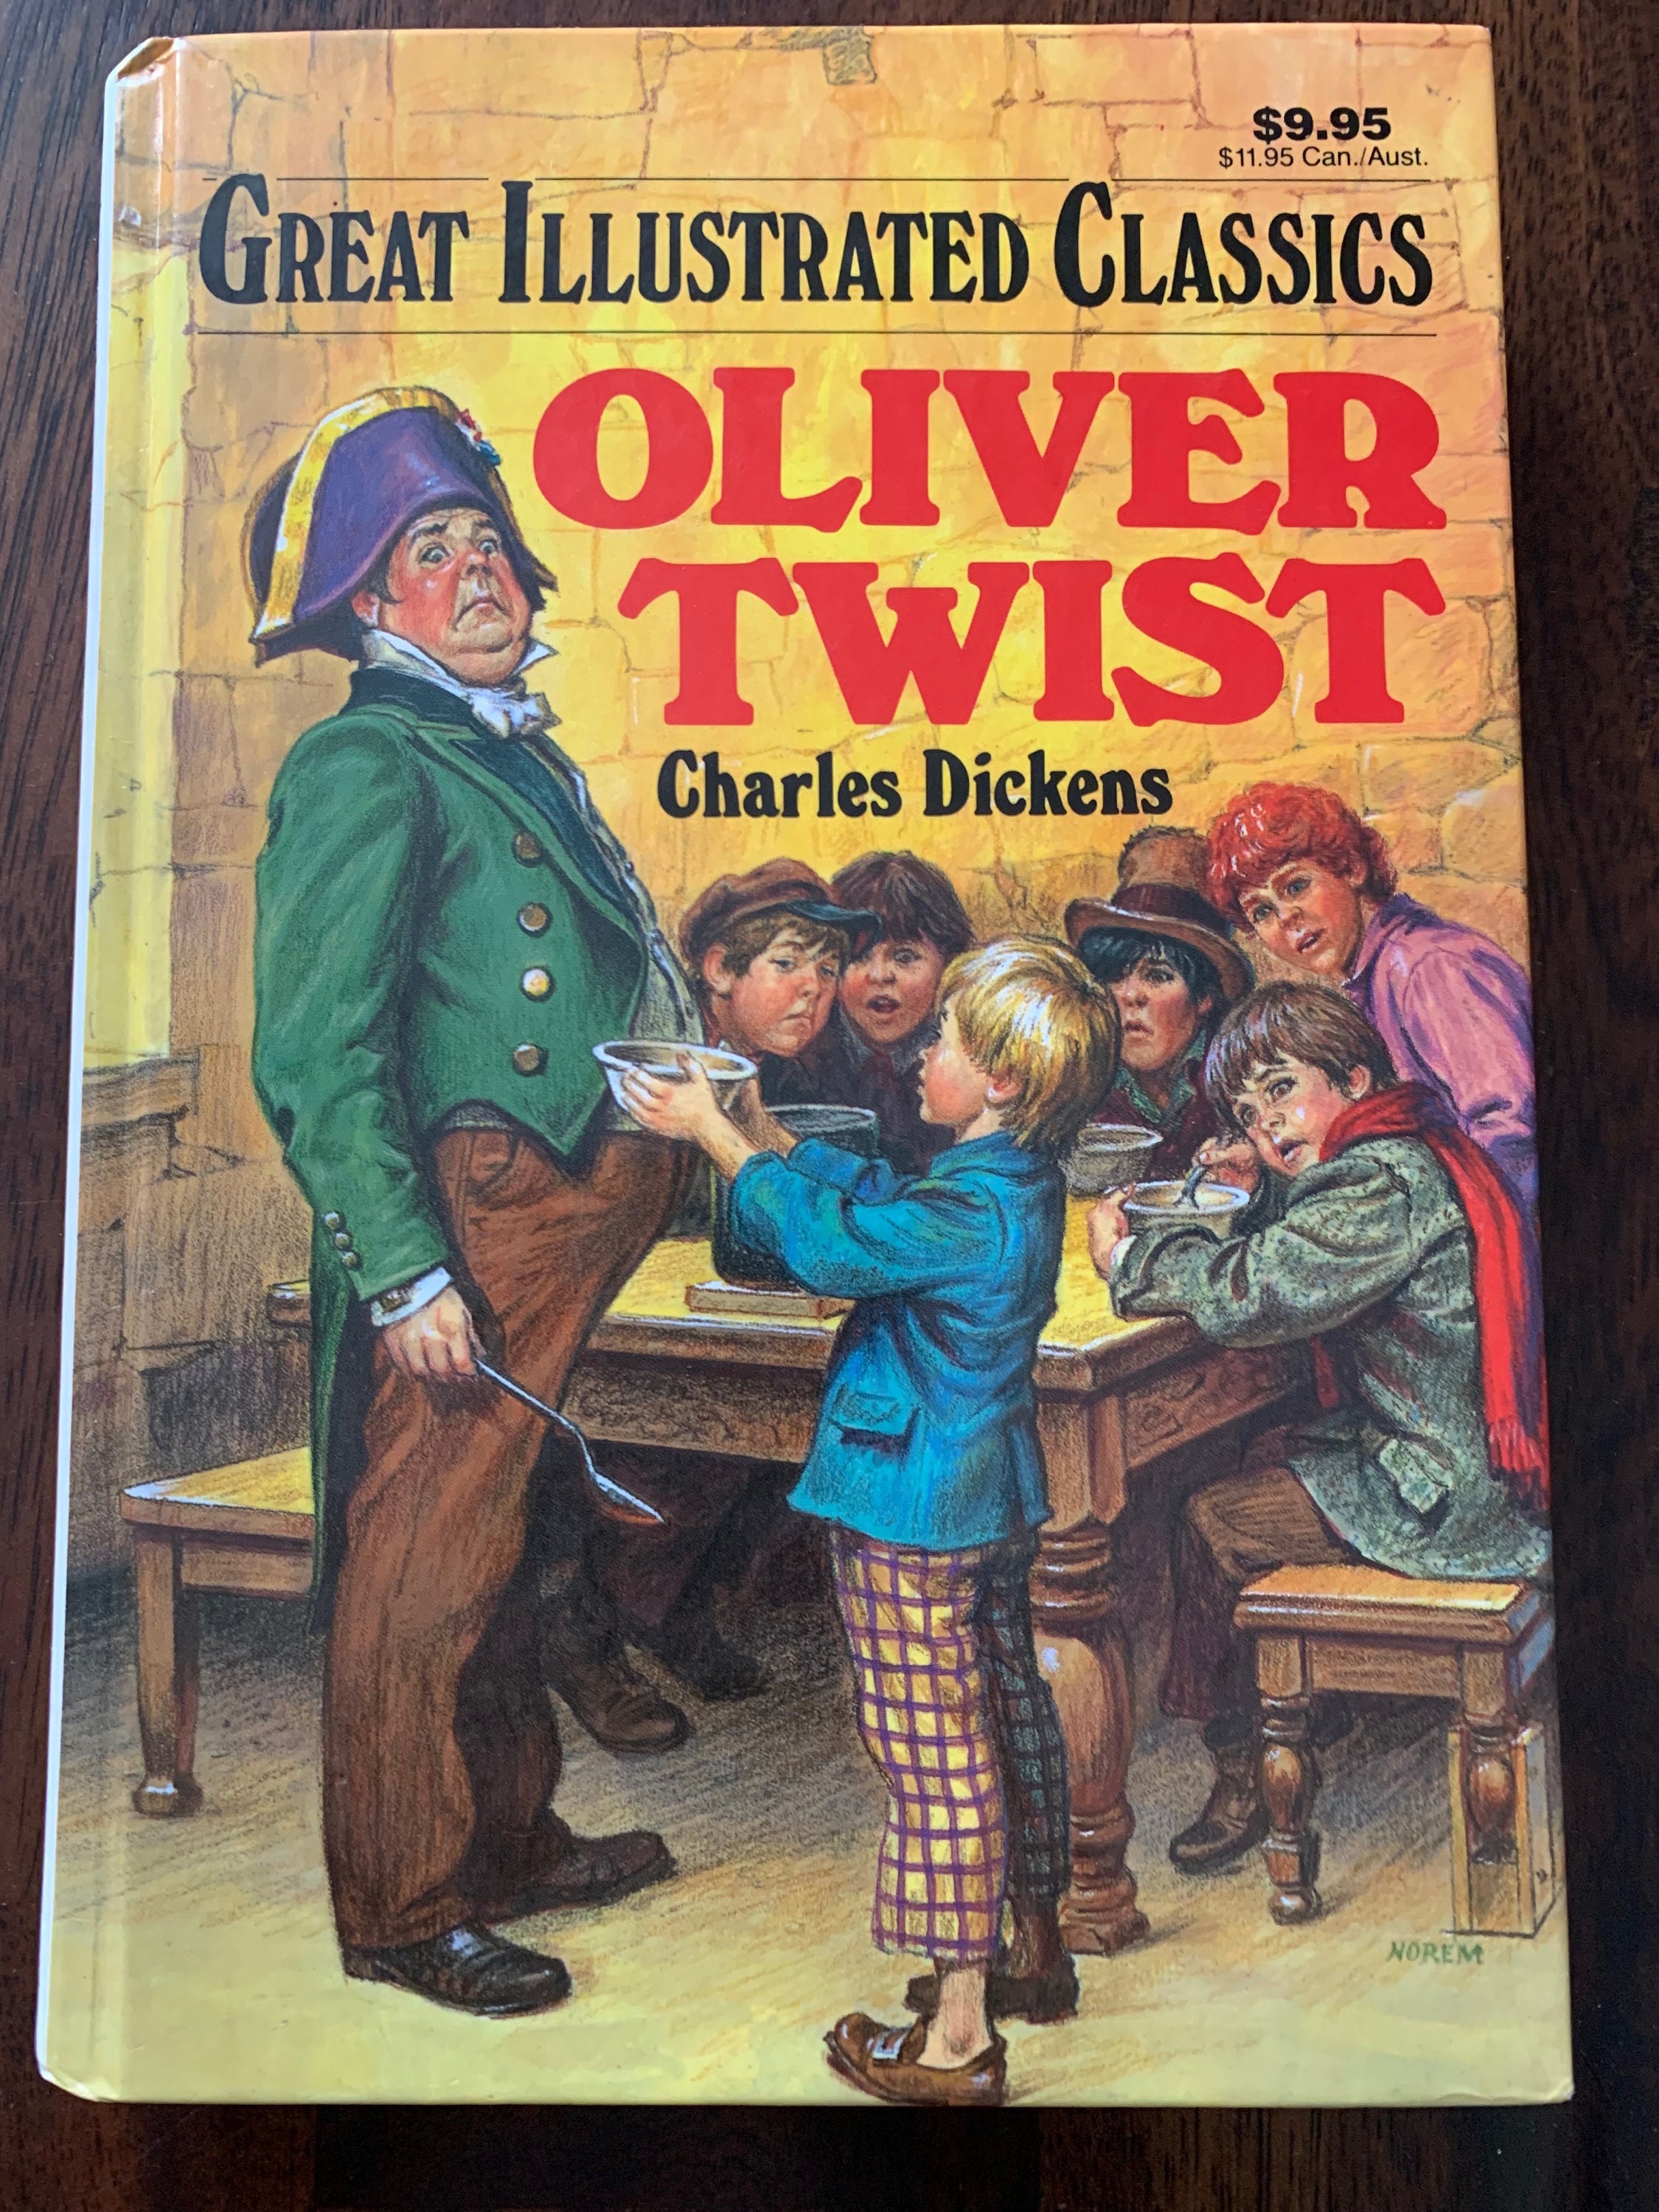 OLIVER TWIST (Illustrated Edition) ebook by Charles Dickens - Rakuten Kobo